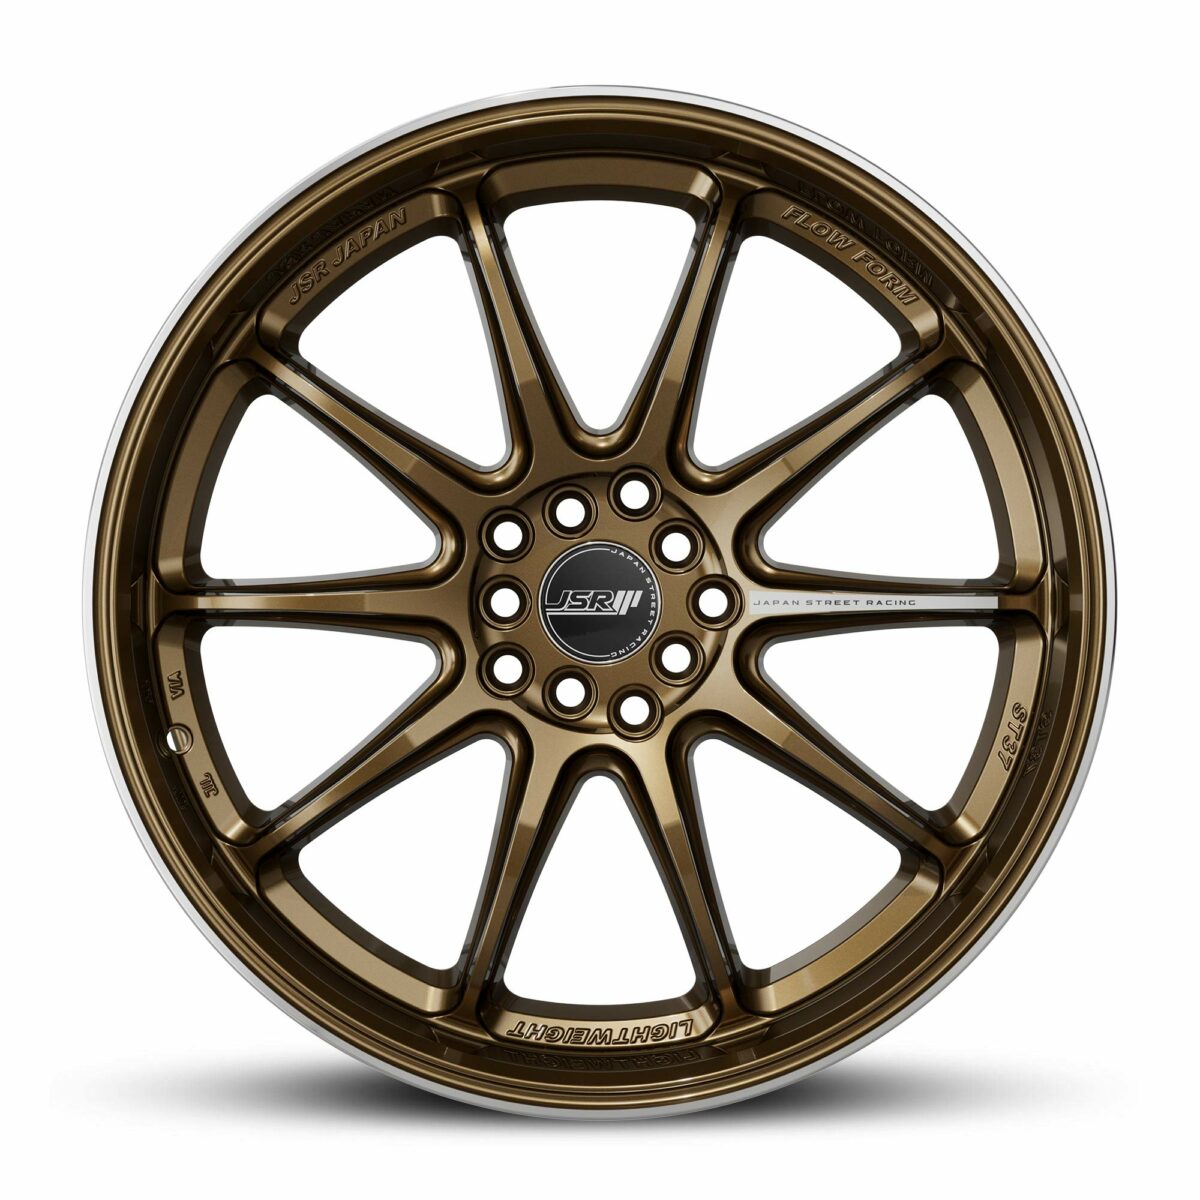 Japan Racing Wheels Flow Form JSR ST37 Dark Bronze Machined Lip JDM Rims 18 Inch 19 Inch Alloys